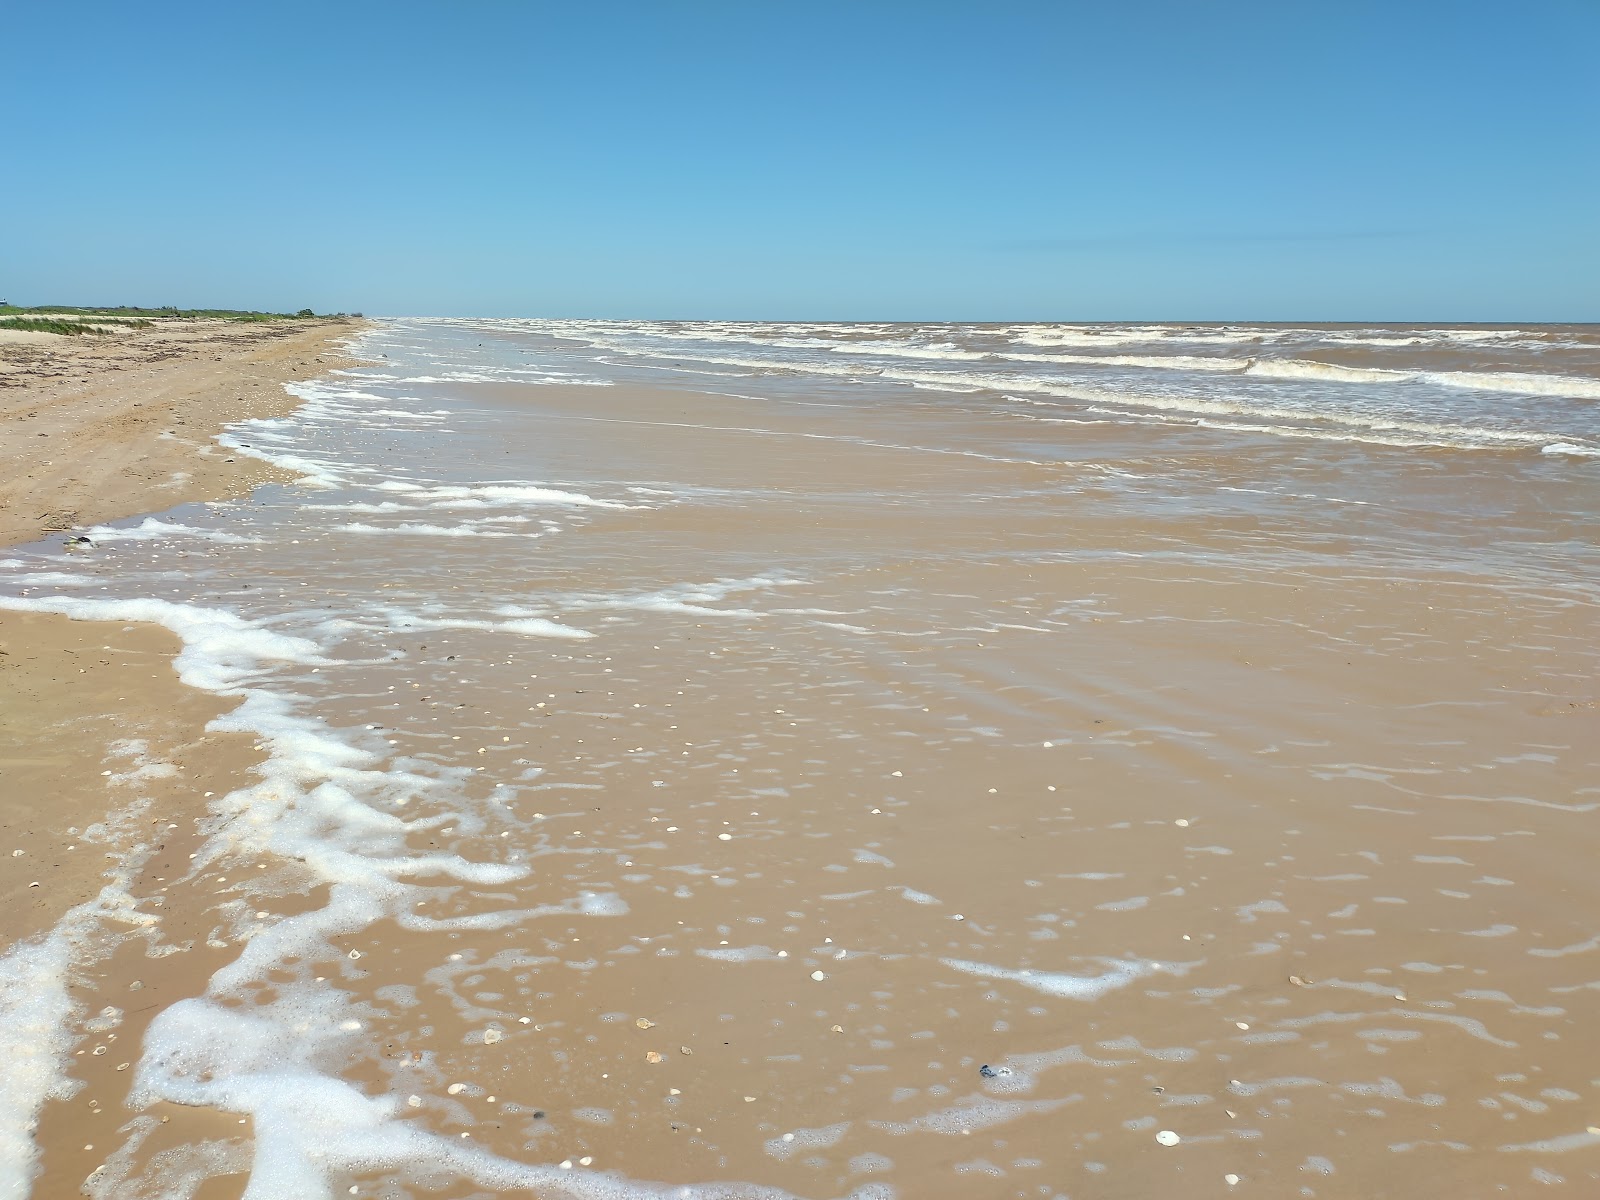 Foto di Sargent beach con una superficie del sabbia grigia